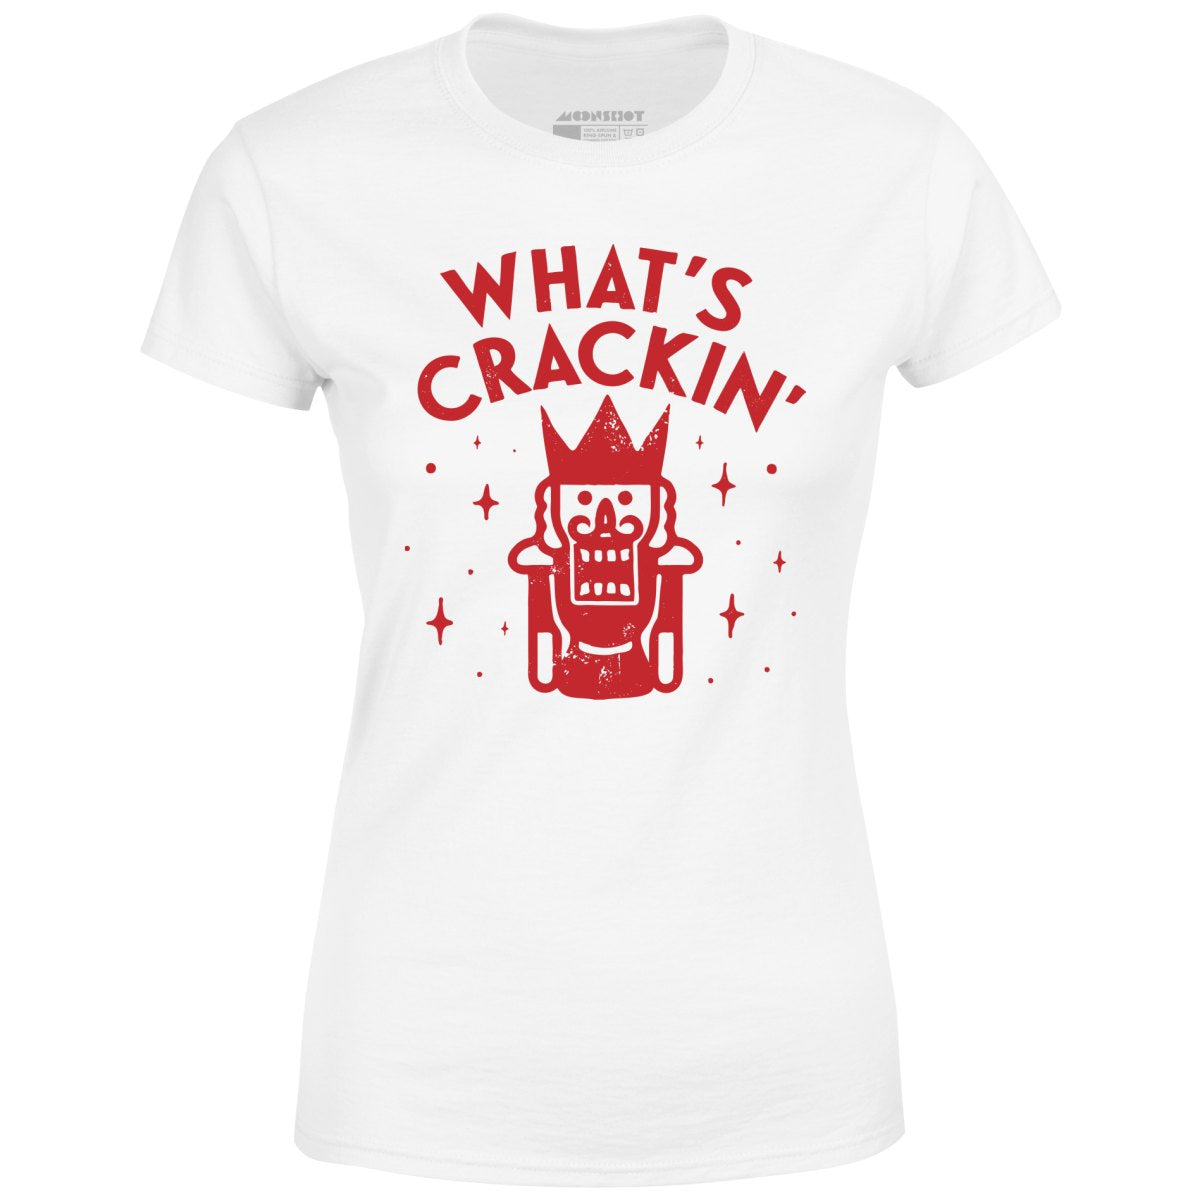 What's Crackin' - Women's T-Shirt